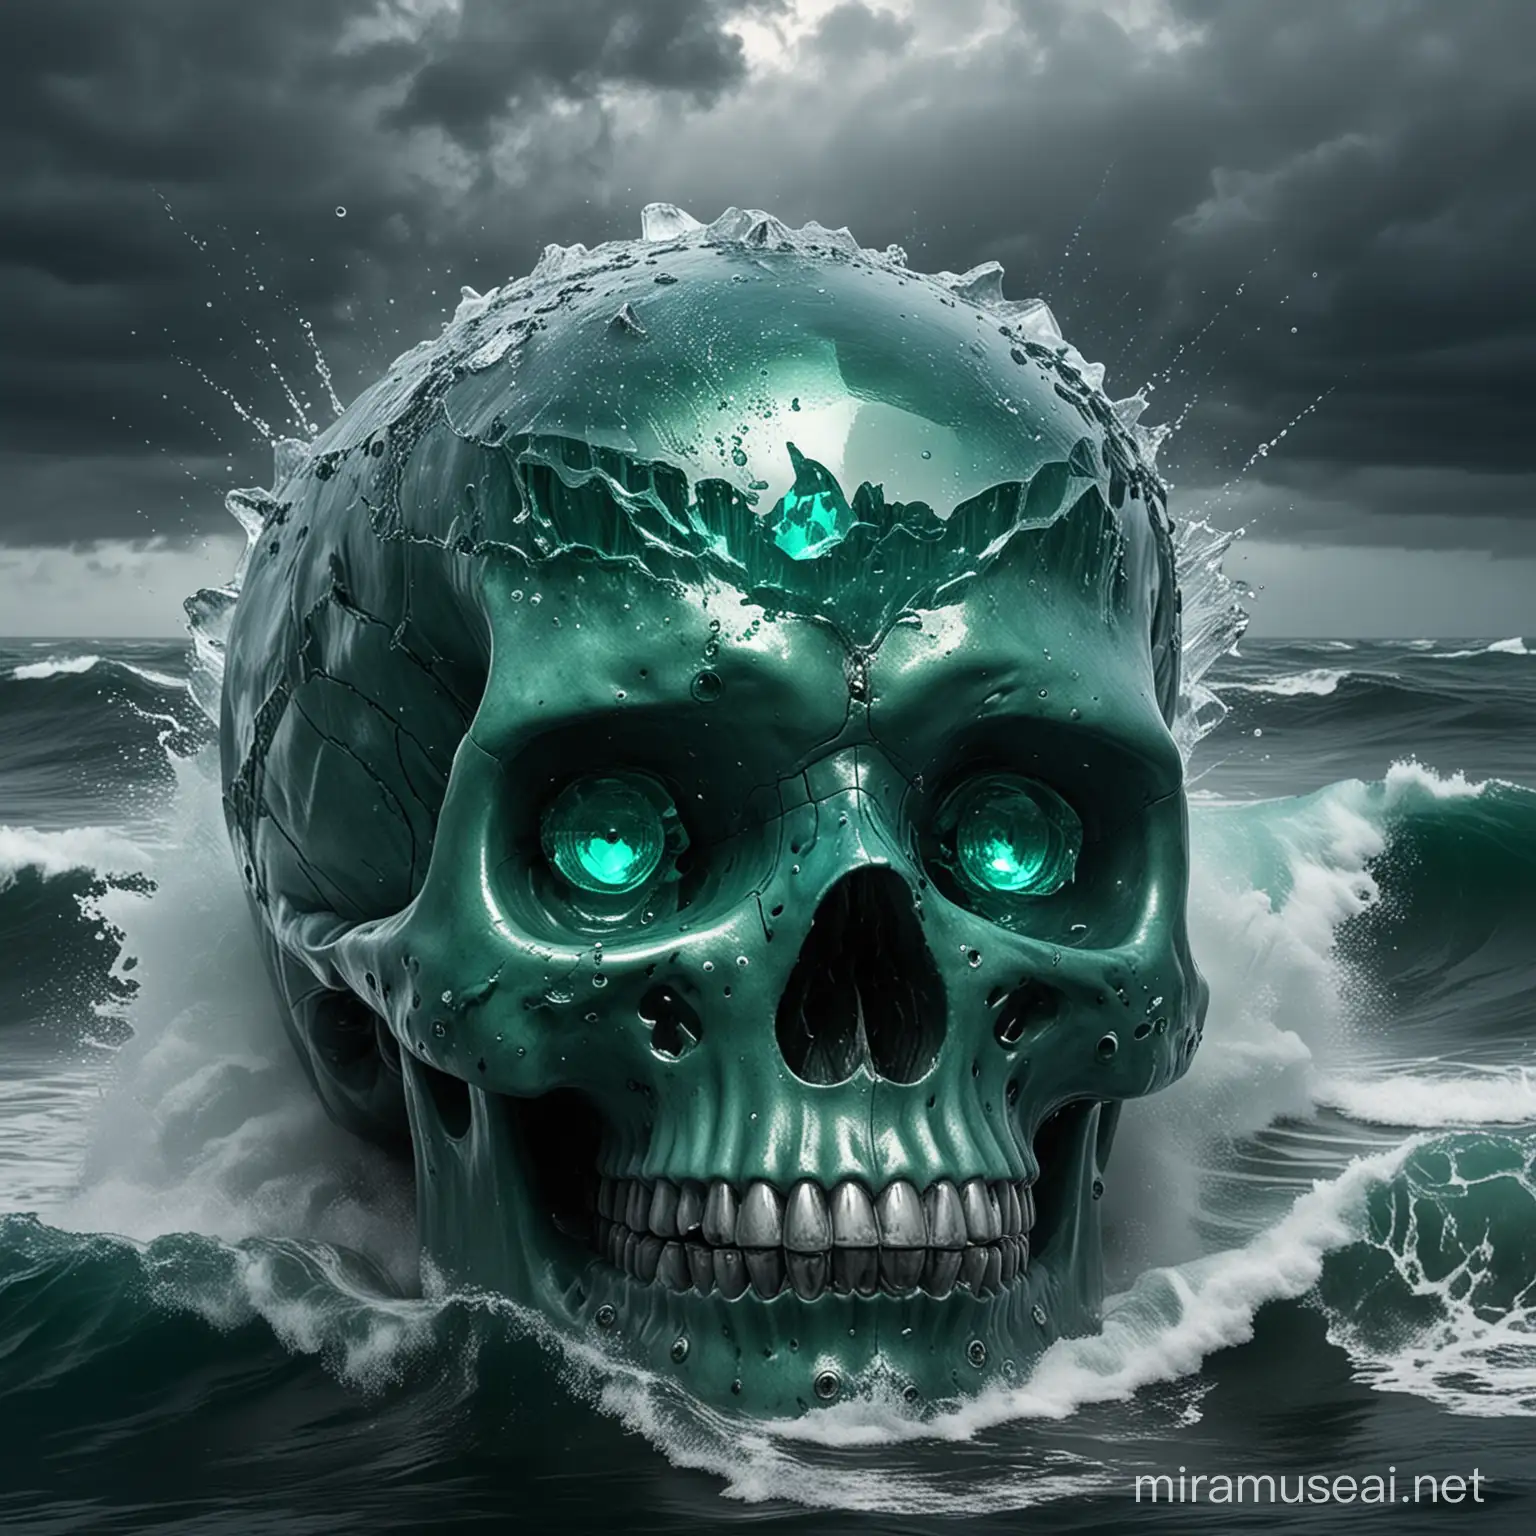 Crystal skull with emerald eyes in heavy ocean storm